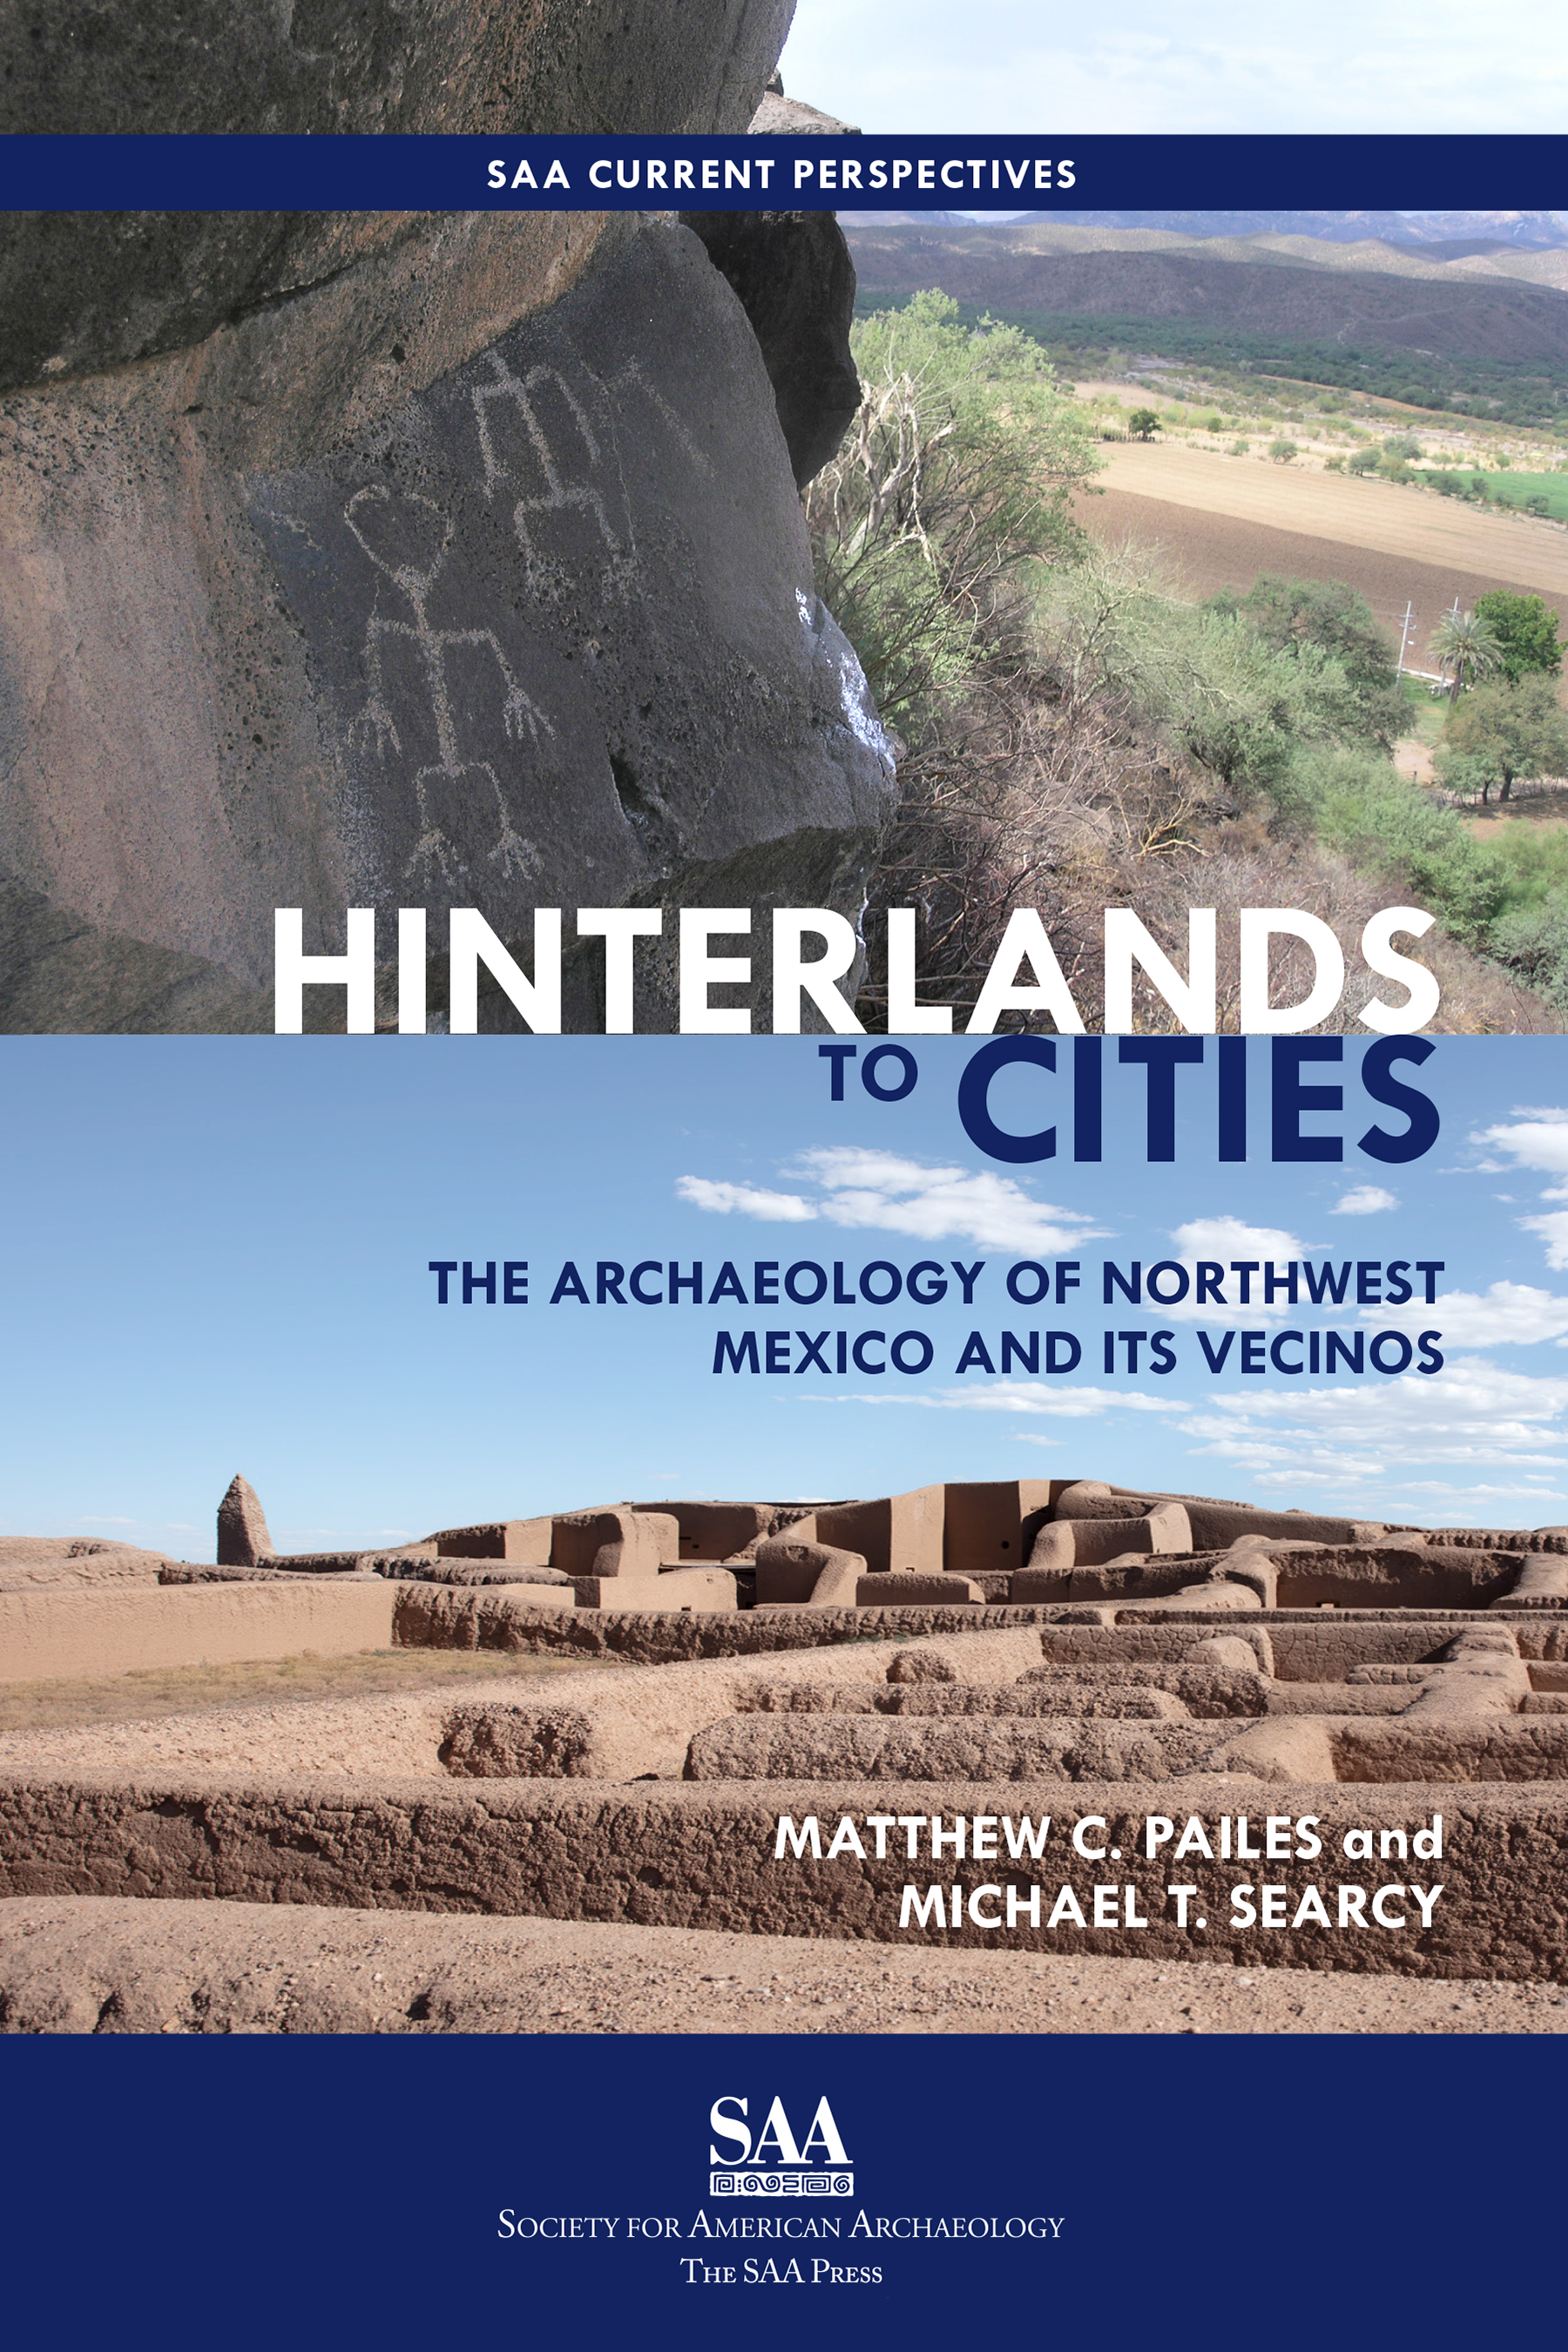 Hinterlands to Cities